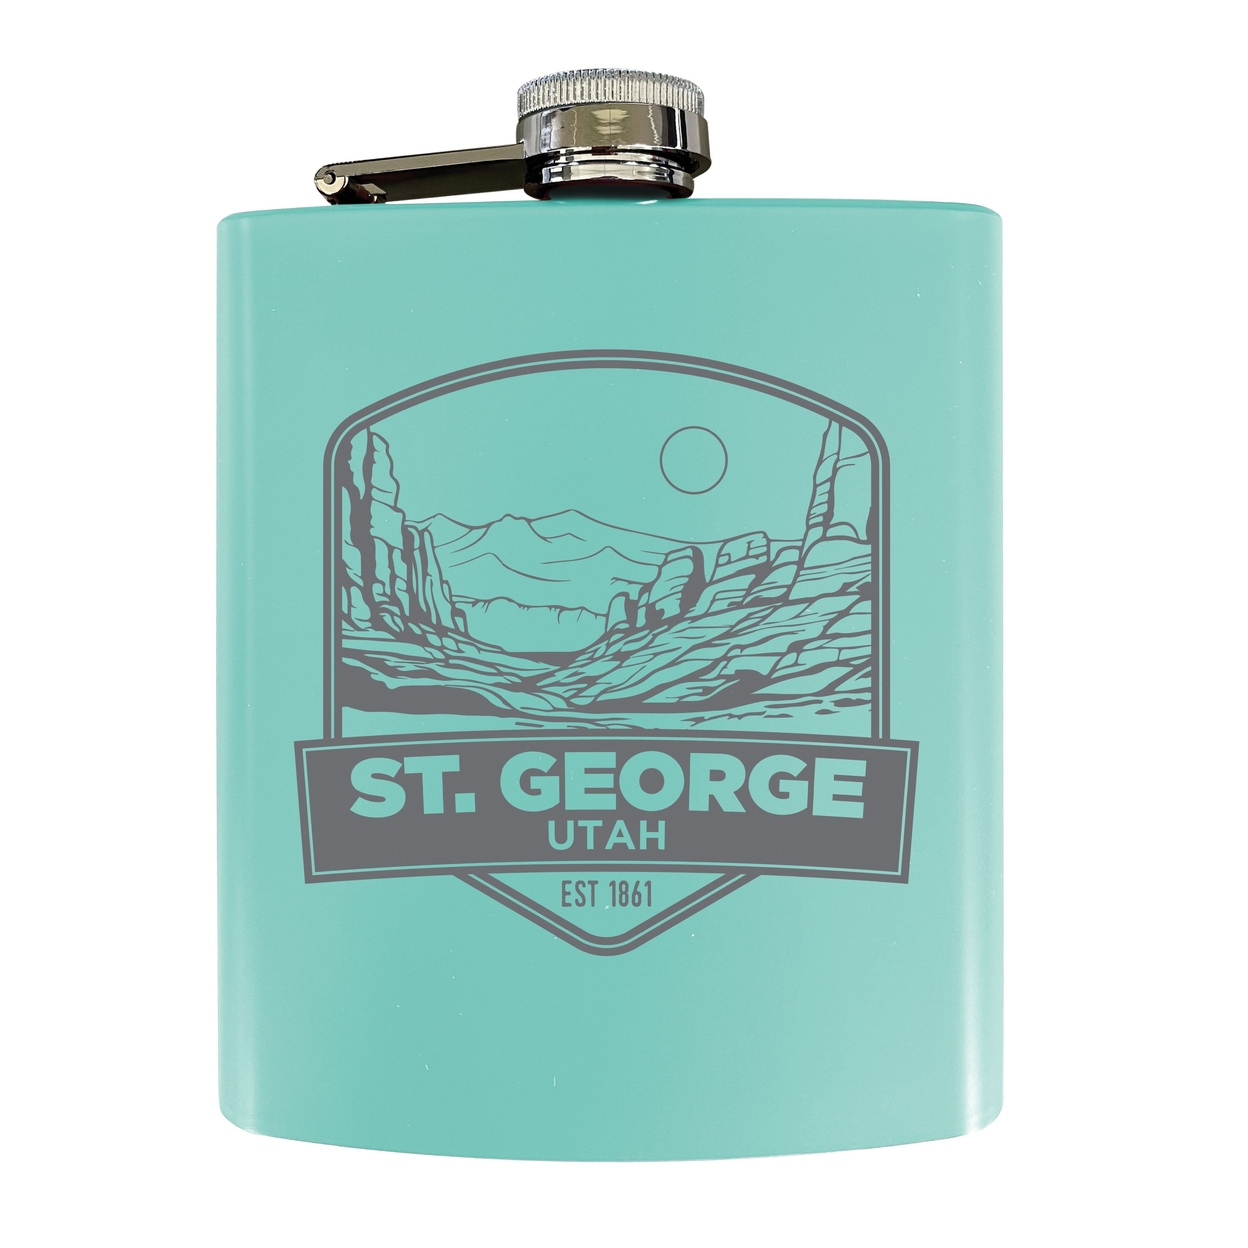 St. George Utah Souvenir 7 Oz Engraved Steel Flask Matte Finish - Black,,2-Pack